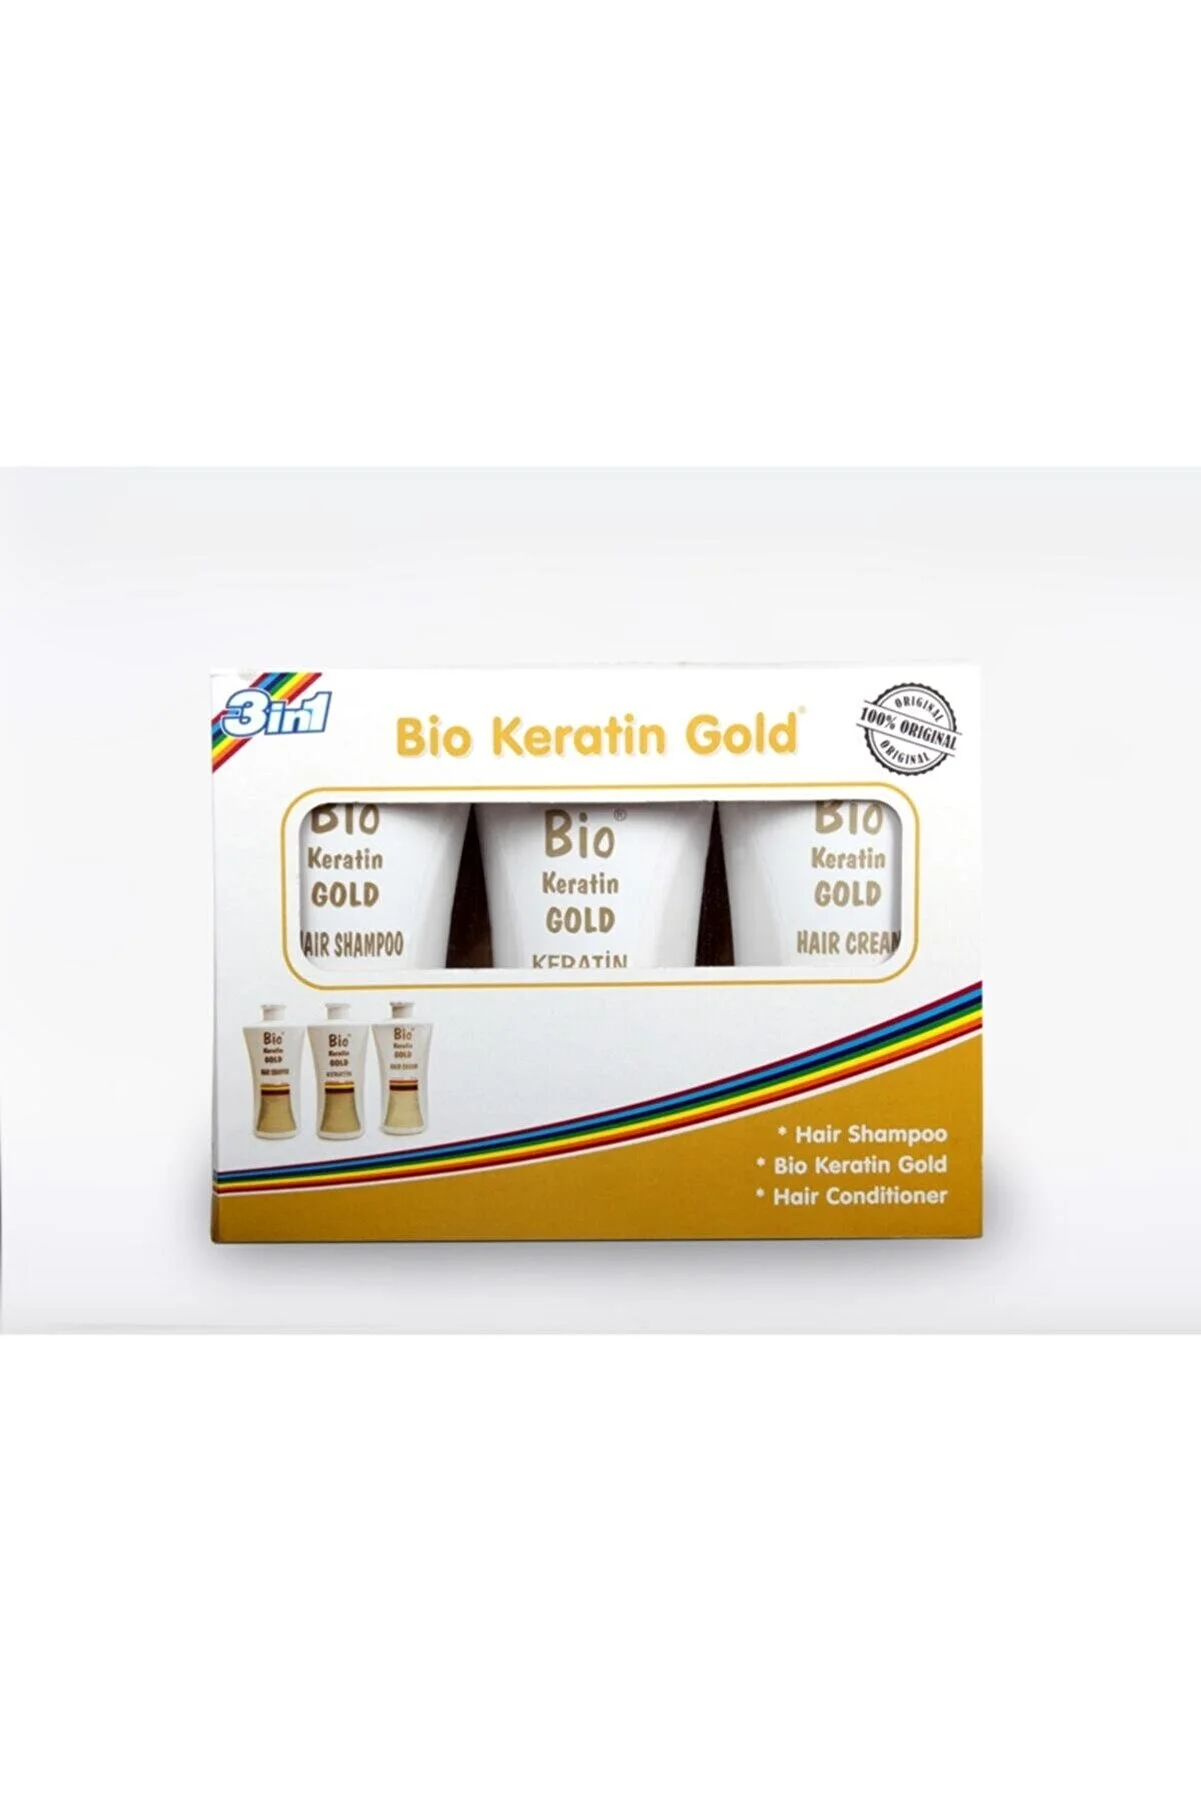 Bio Keratin Gold Permanent Hair Forming Set Of 3 - 3